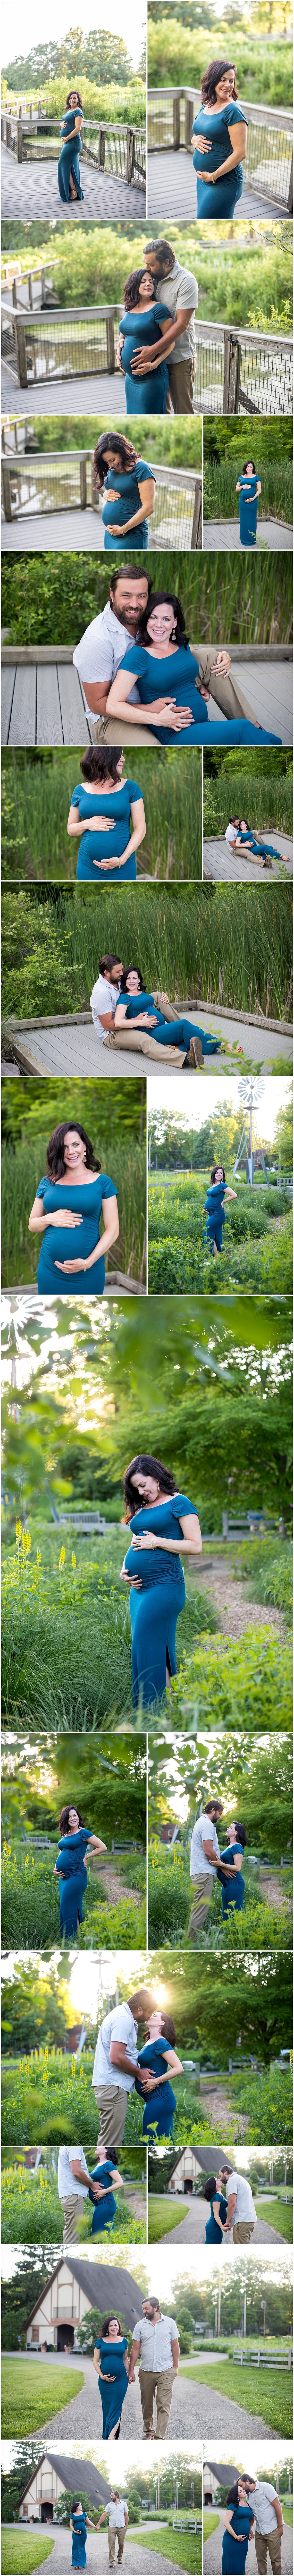 D Family Maternity Photo Session In Inniswood Metro Gardens